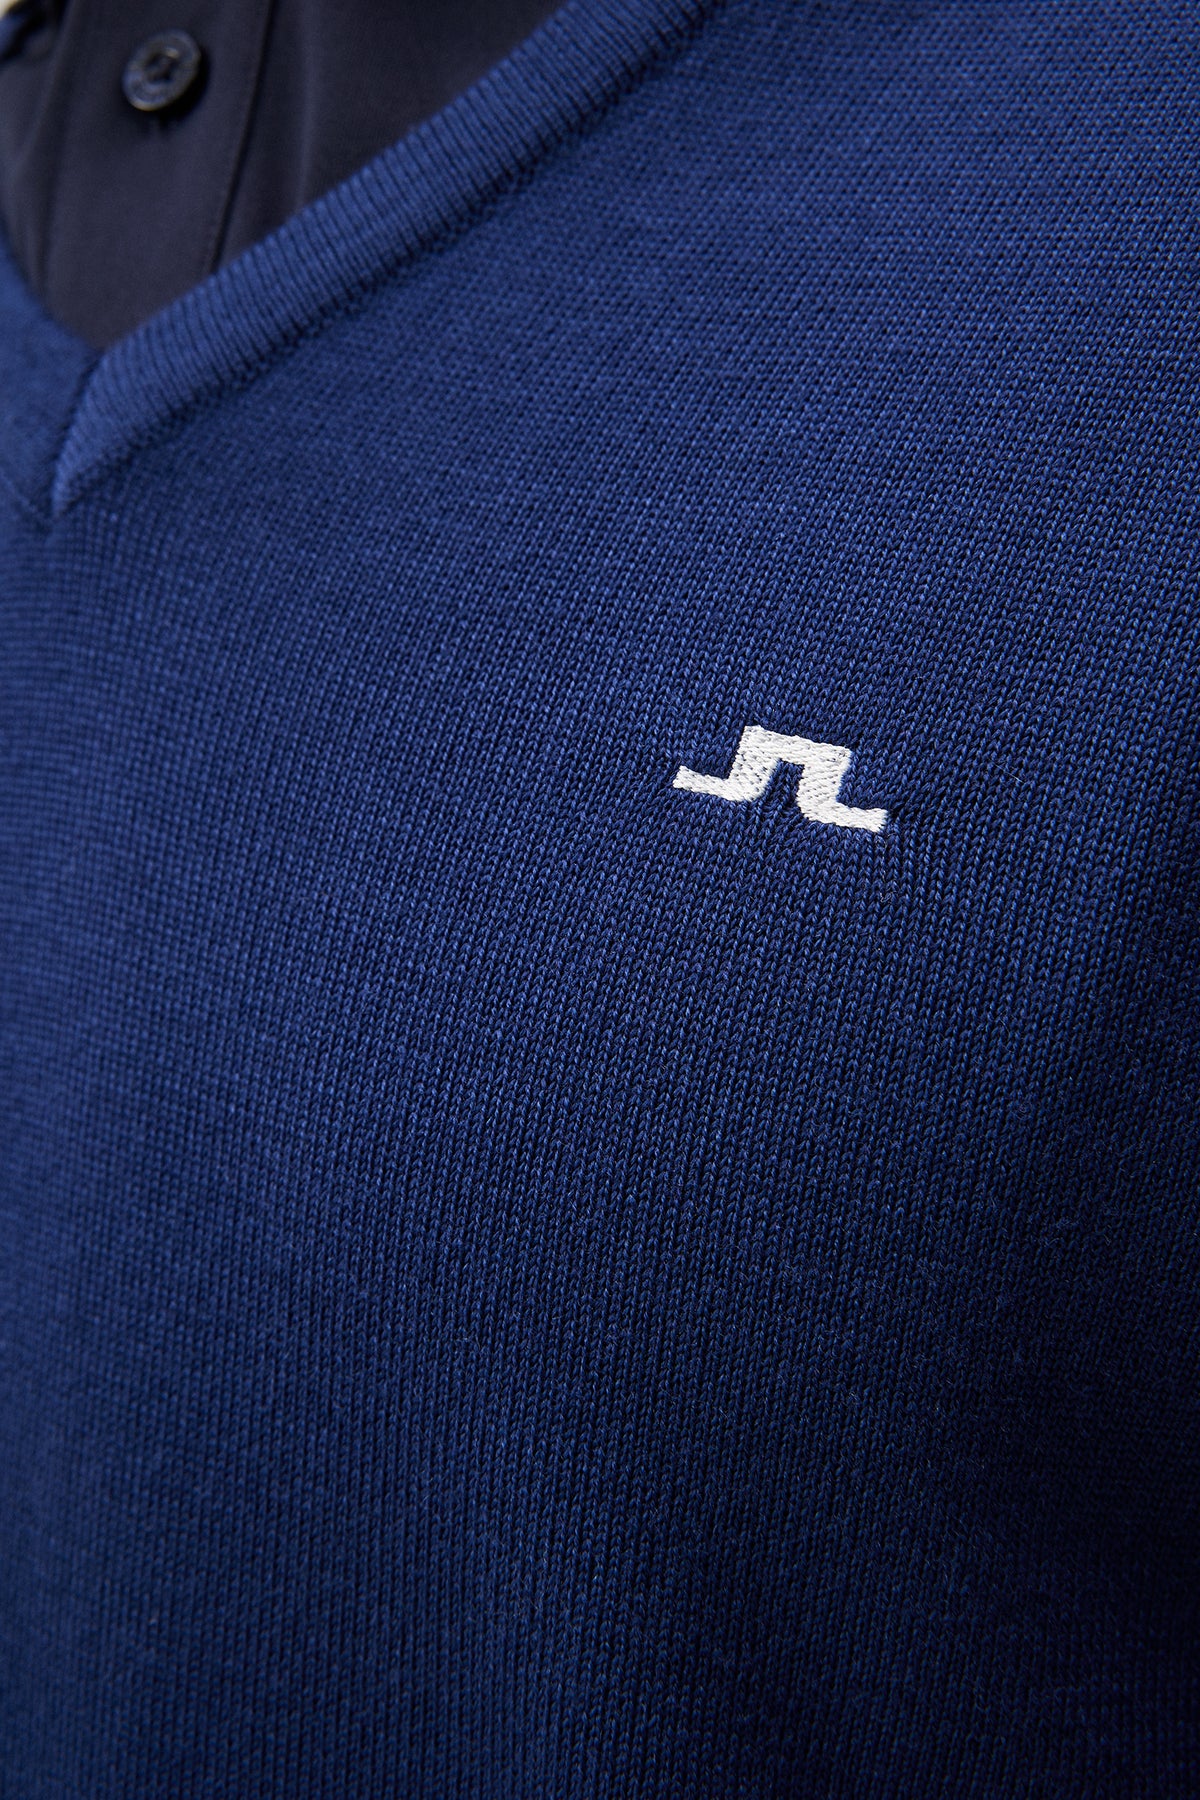 Lymann Knitted Sweater / Estate Blue